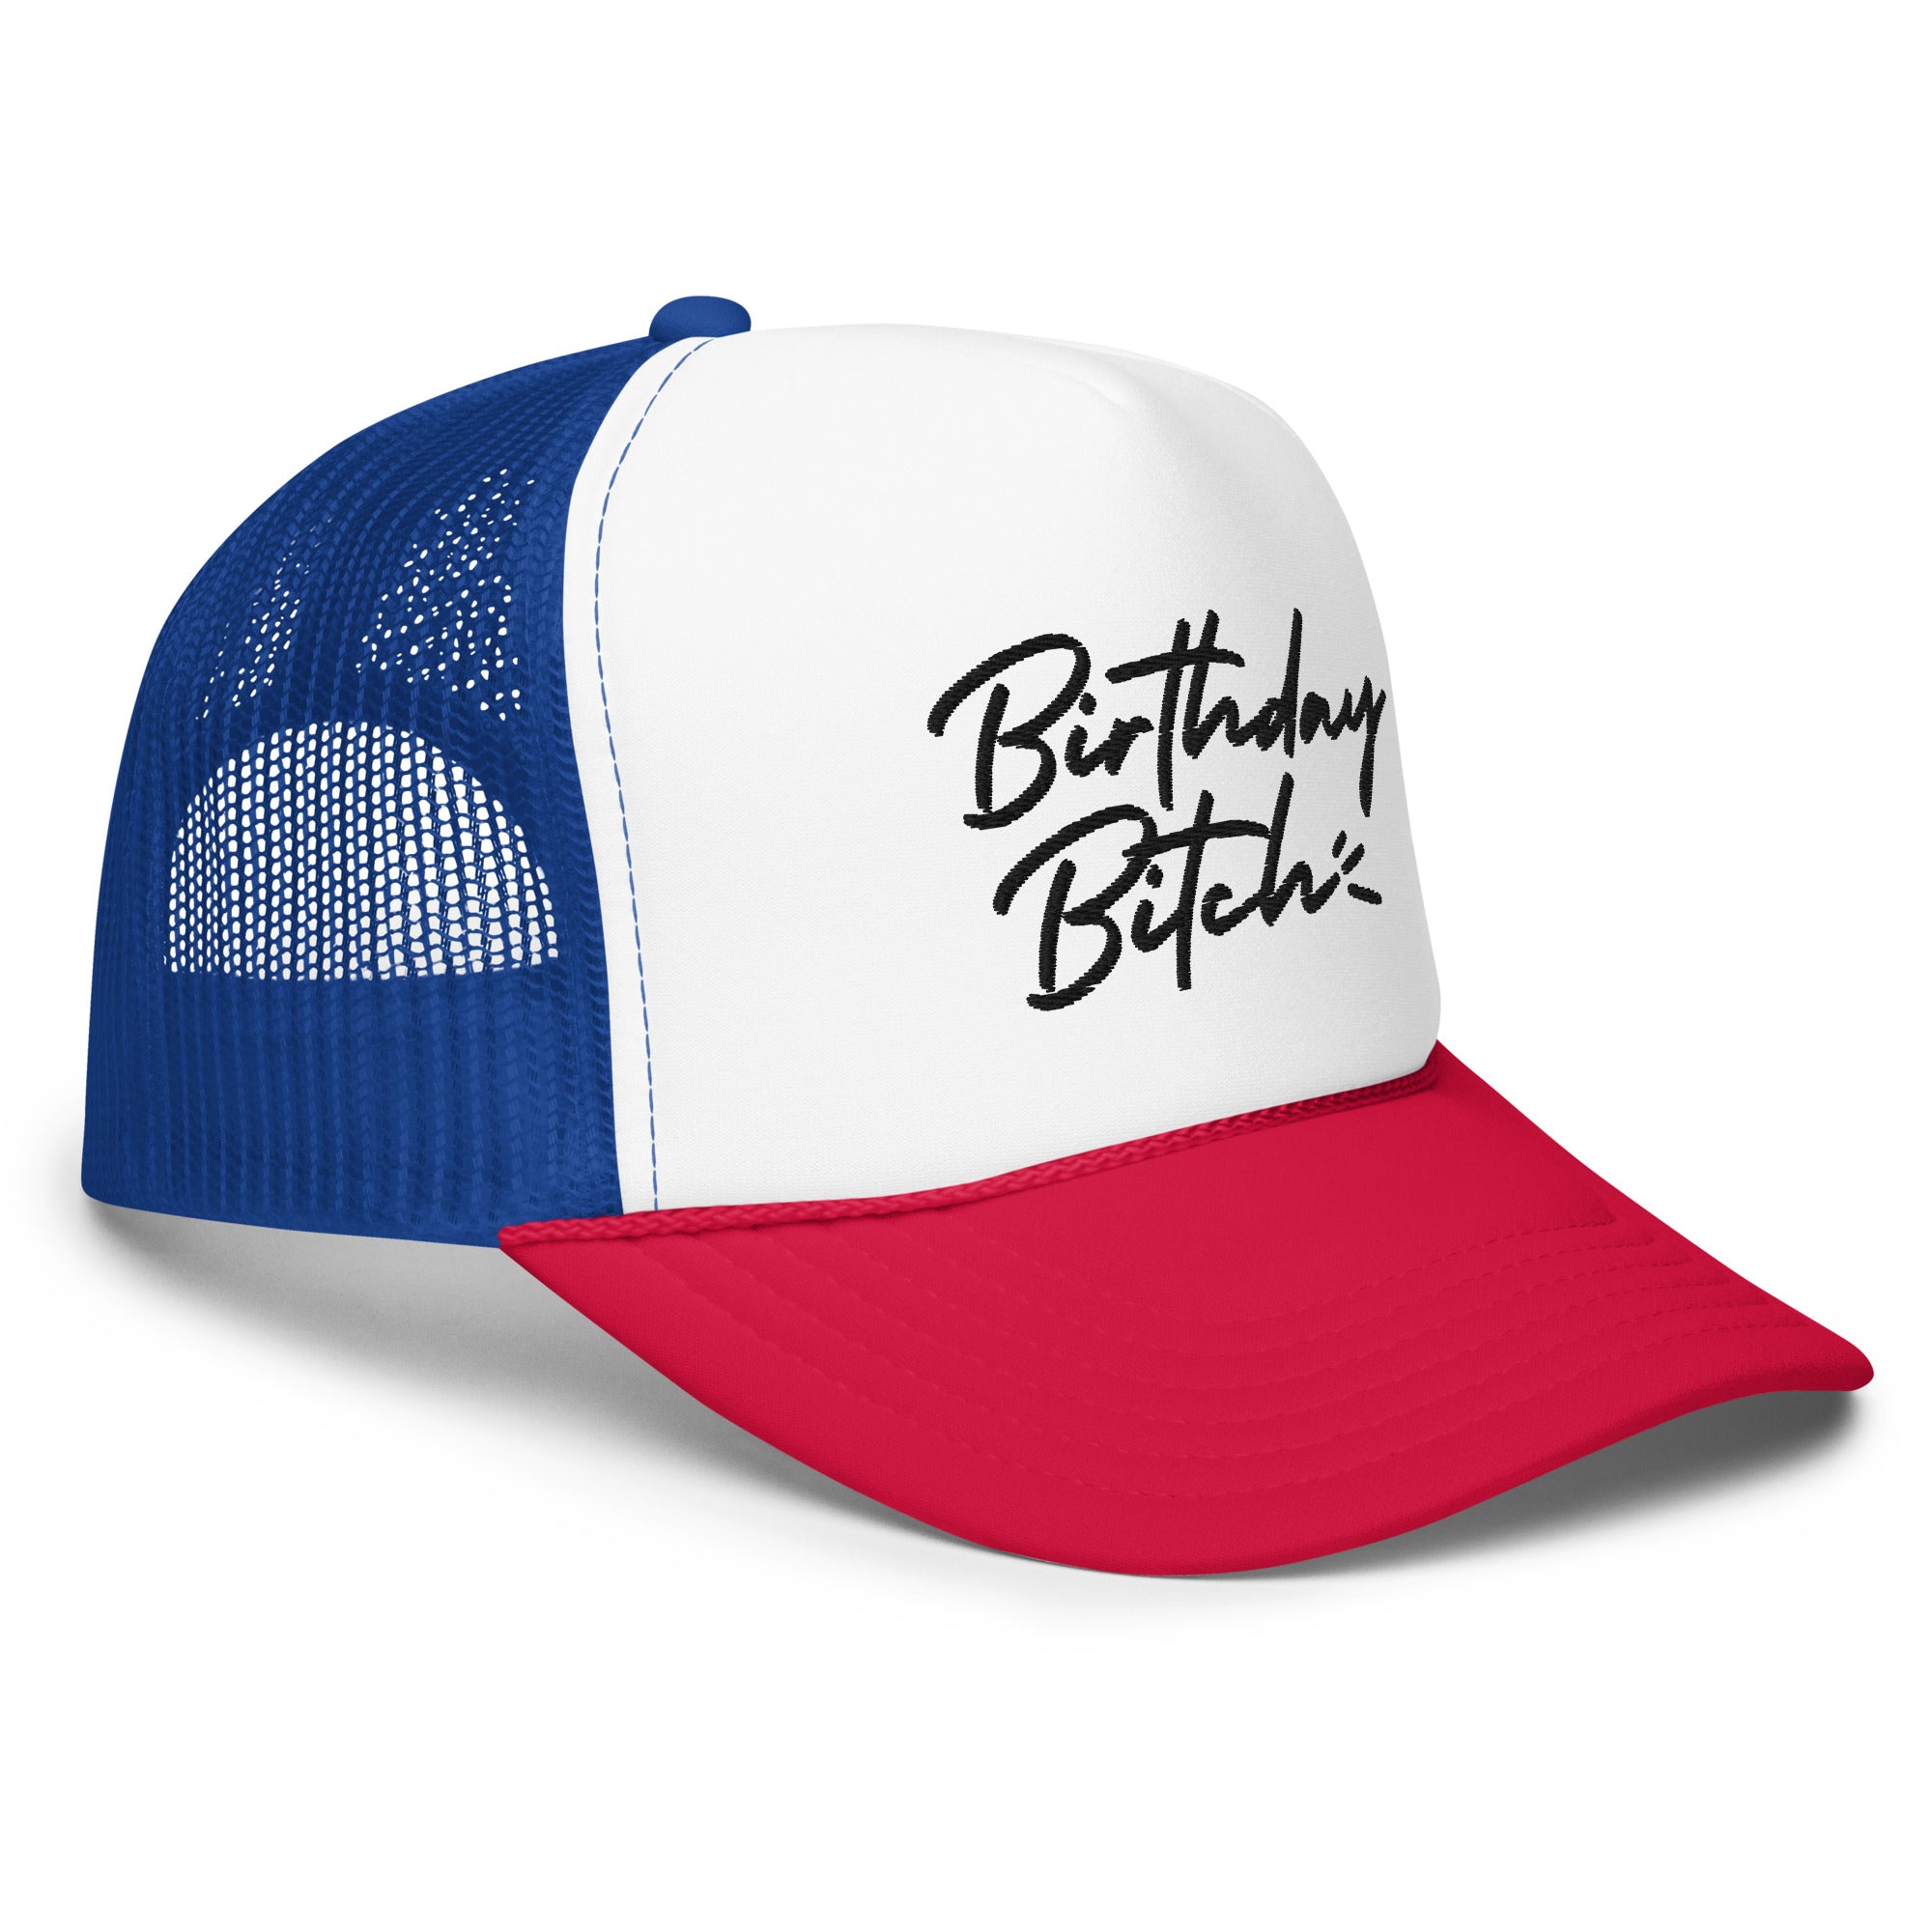 Birthday Bitch, Foam trucker hat